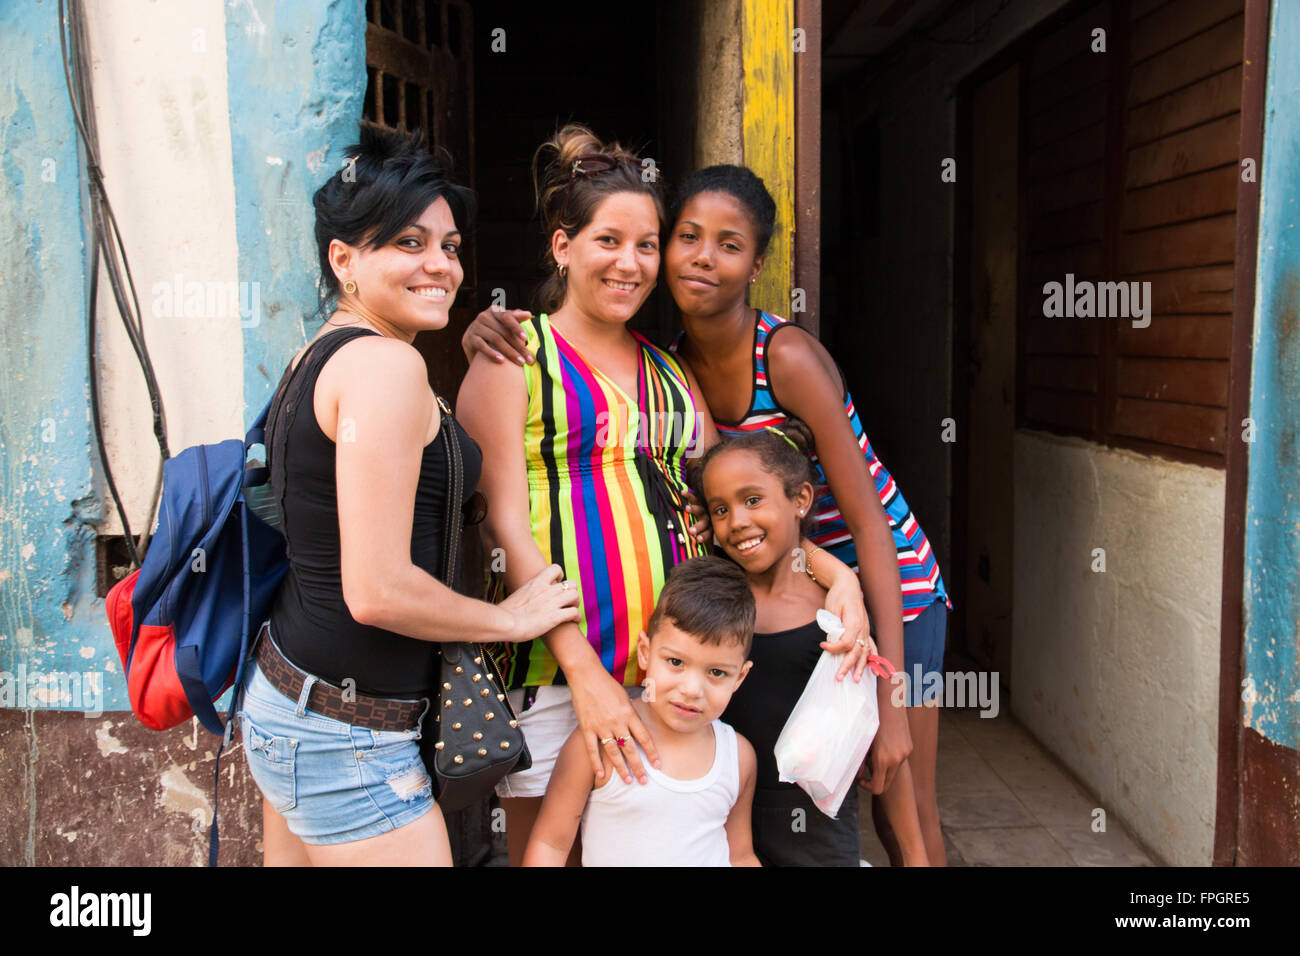 North America, Latin America, Caribbean, Cuba, Vieja Havana’s street scenes and neighborhood. Stock Photo